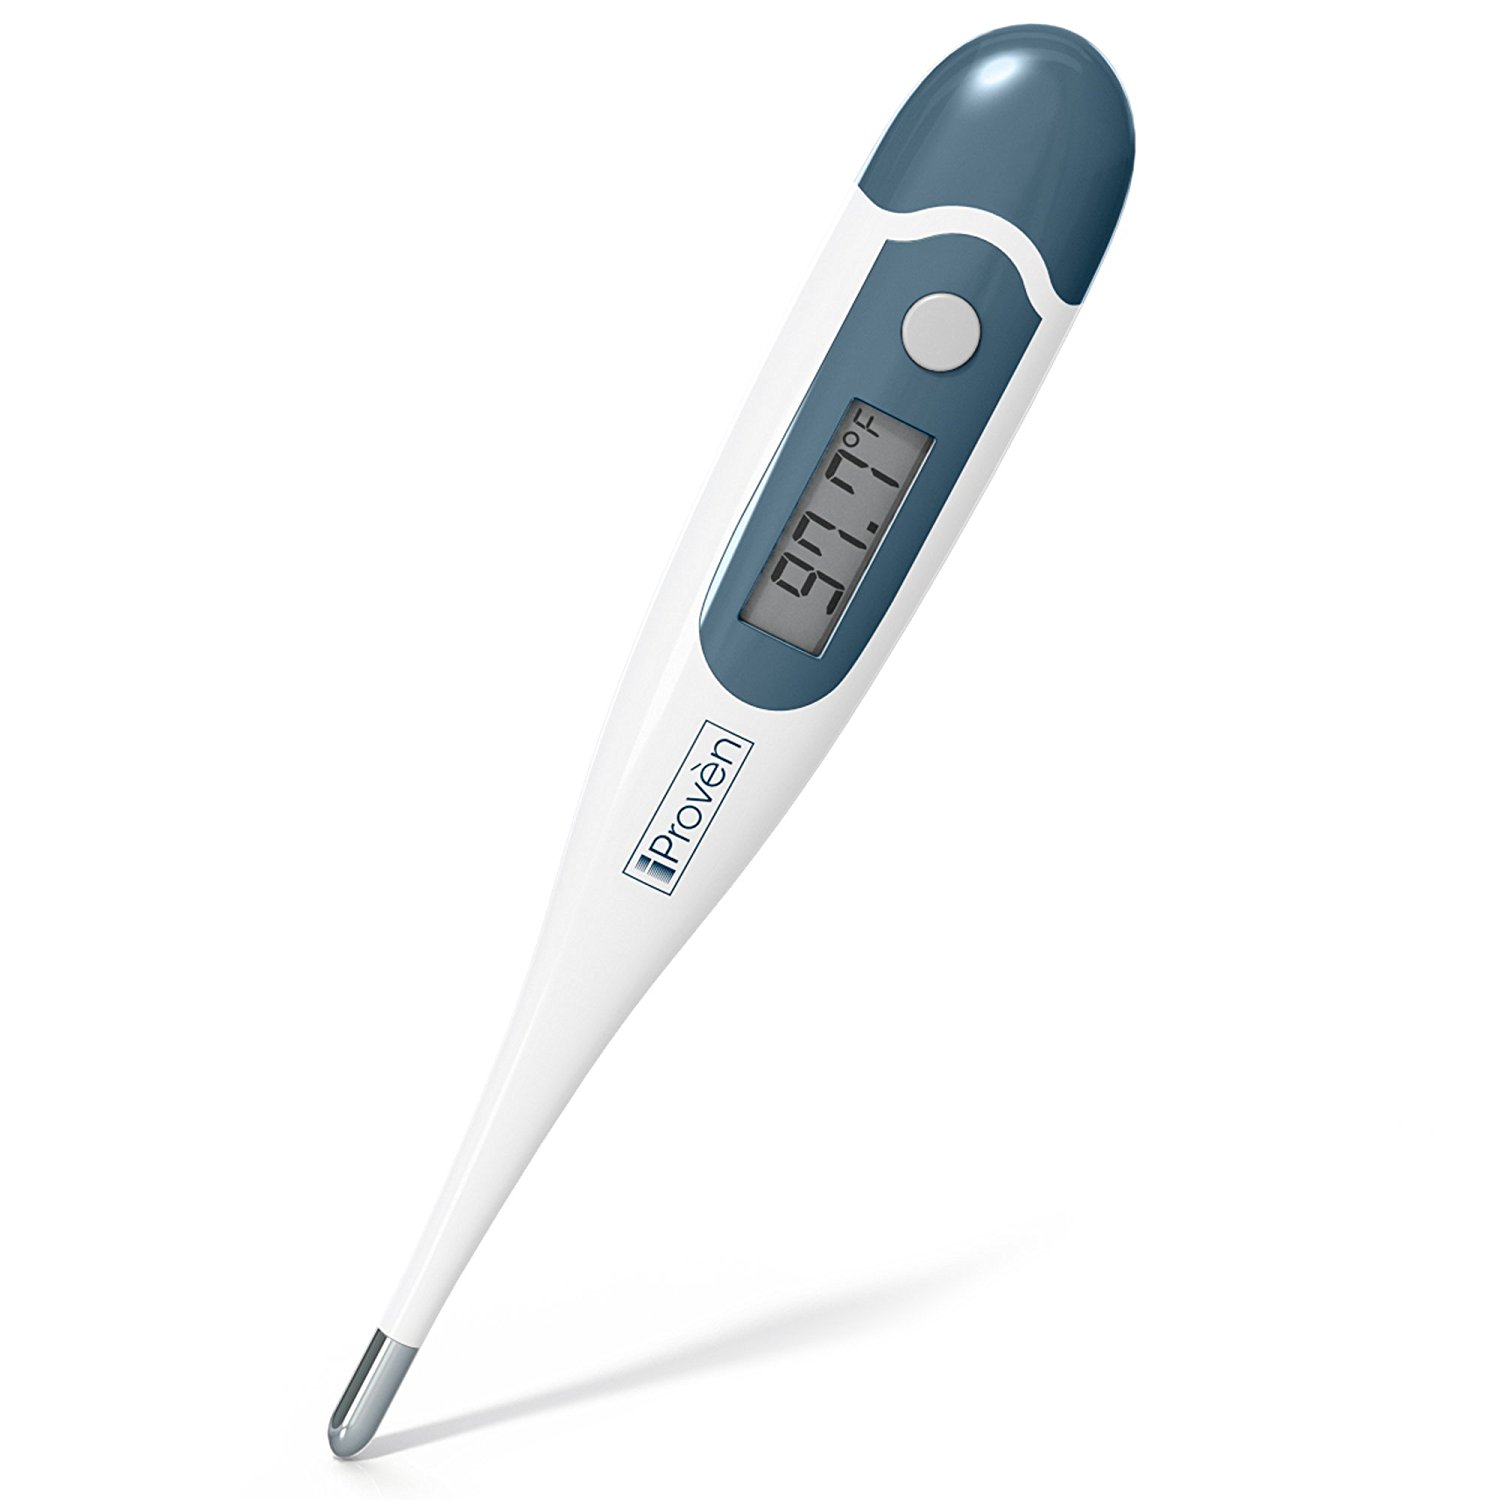 Digitales Fieberthermometer - Rektal-, Oral- & Achselthermometer > Digital thermometer iProvèn DT-K117B